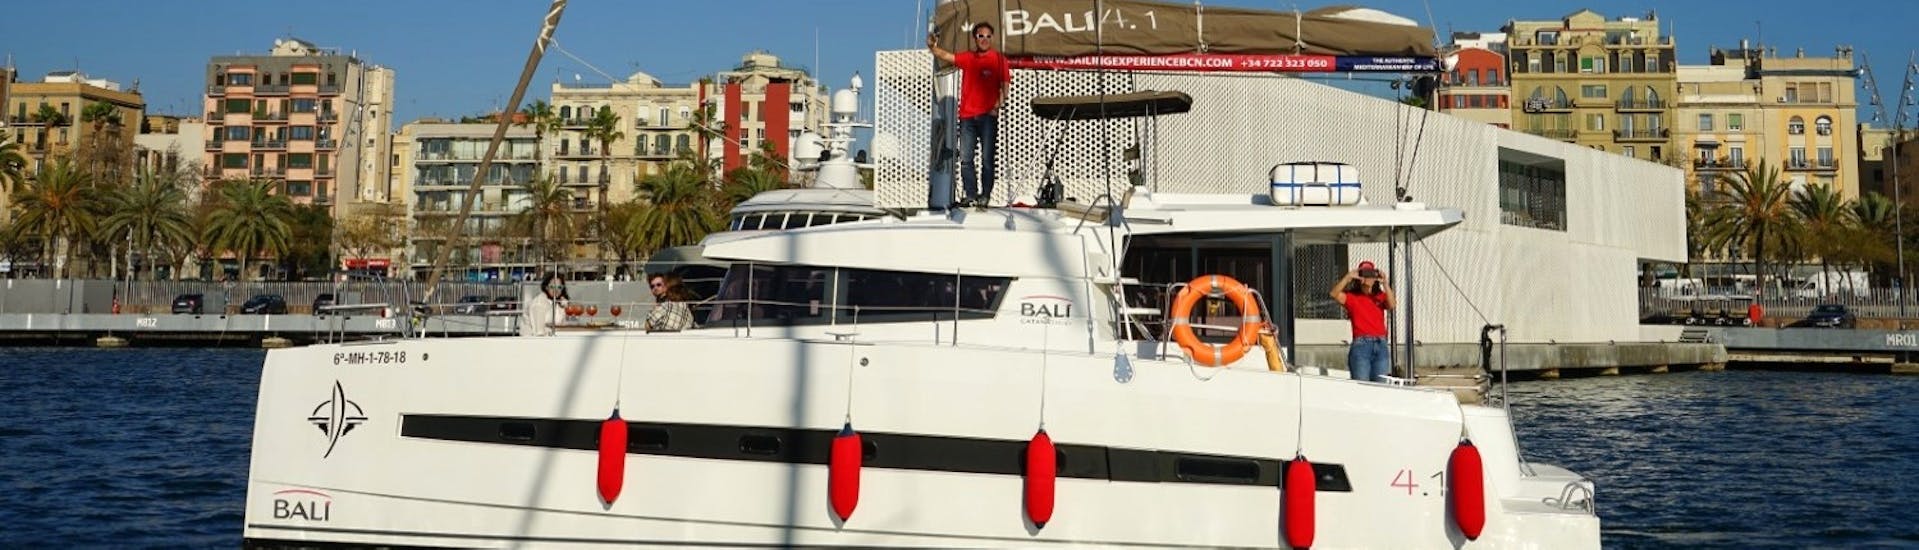 Balade privée en catamaran - Plage de la Barceloneta & Baignade.